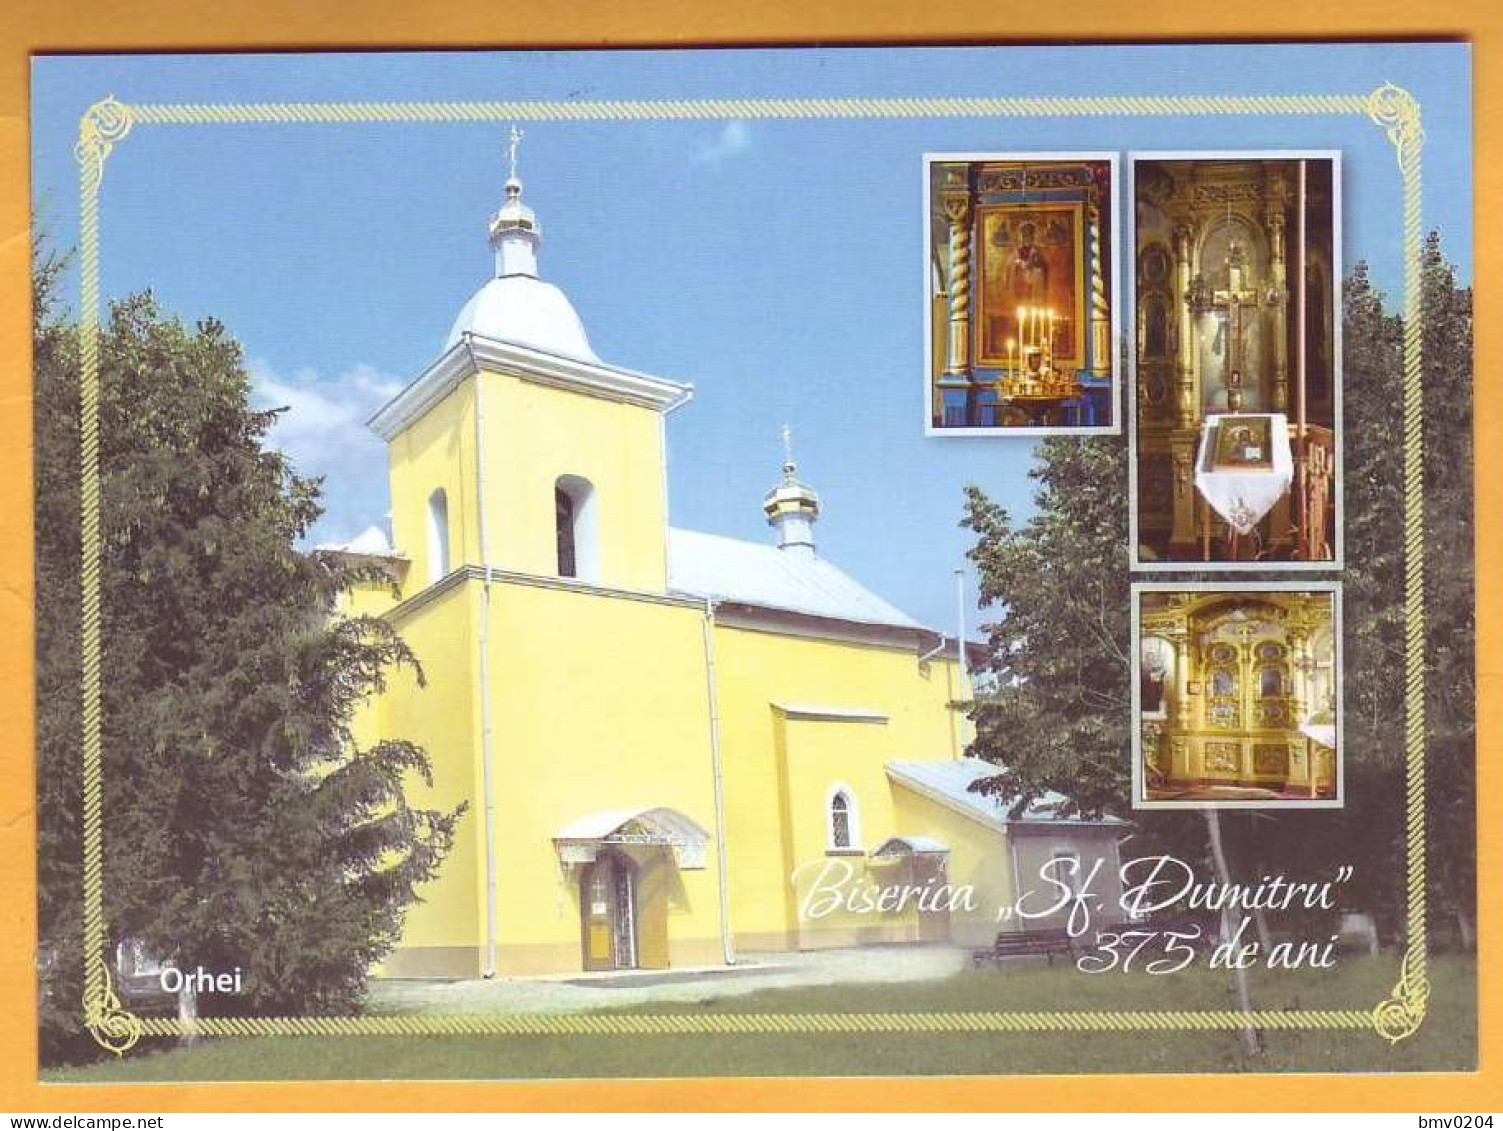 2011 Moldova Moldavie Moldau  FDC.   Orhei. Church. 375 Years. Postcard. - Churches & Cathedrals